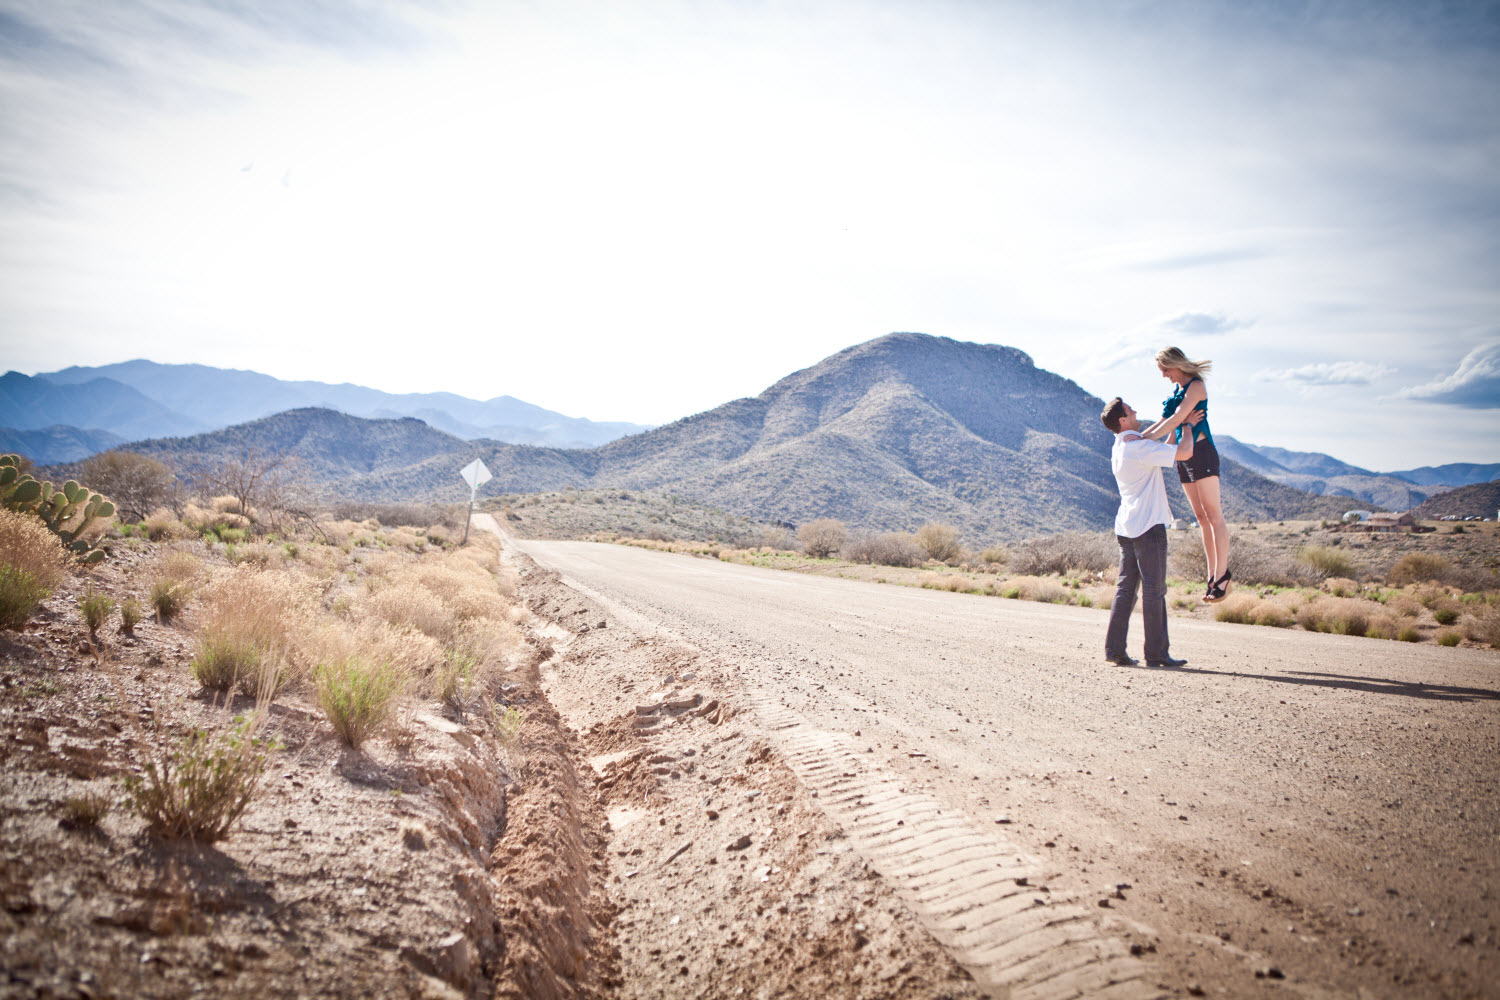  in Arizona desert with sprawling mountains in background OneWedcom 1500x1000